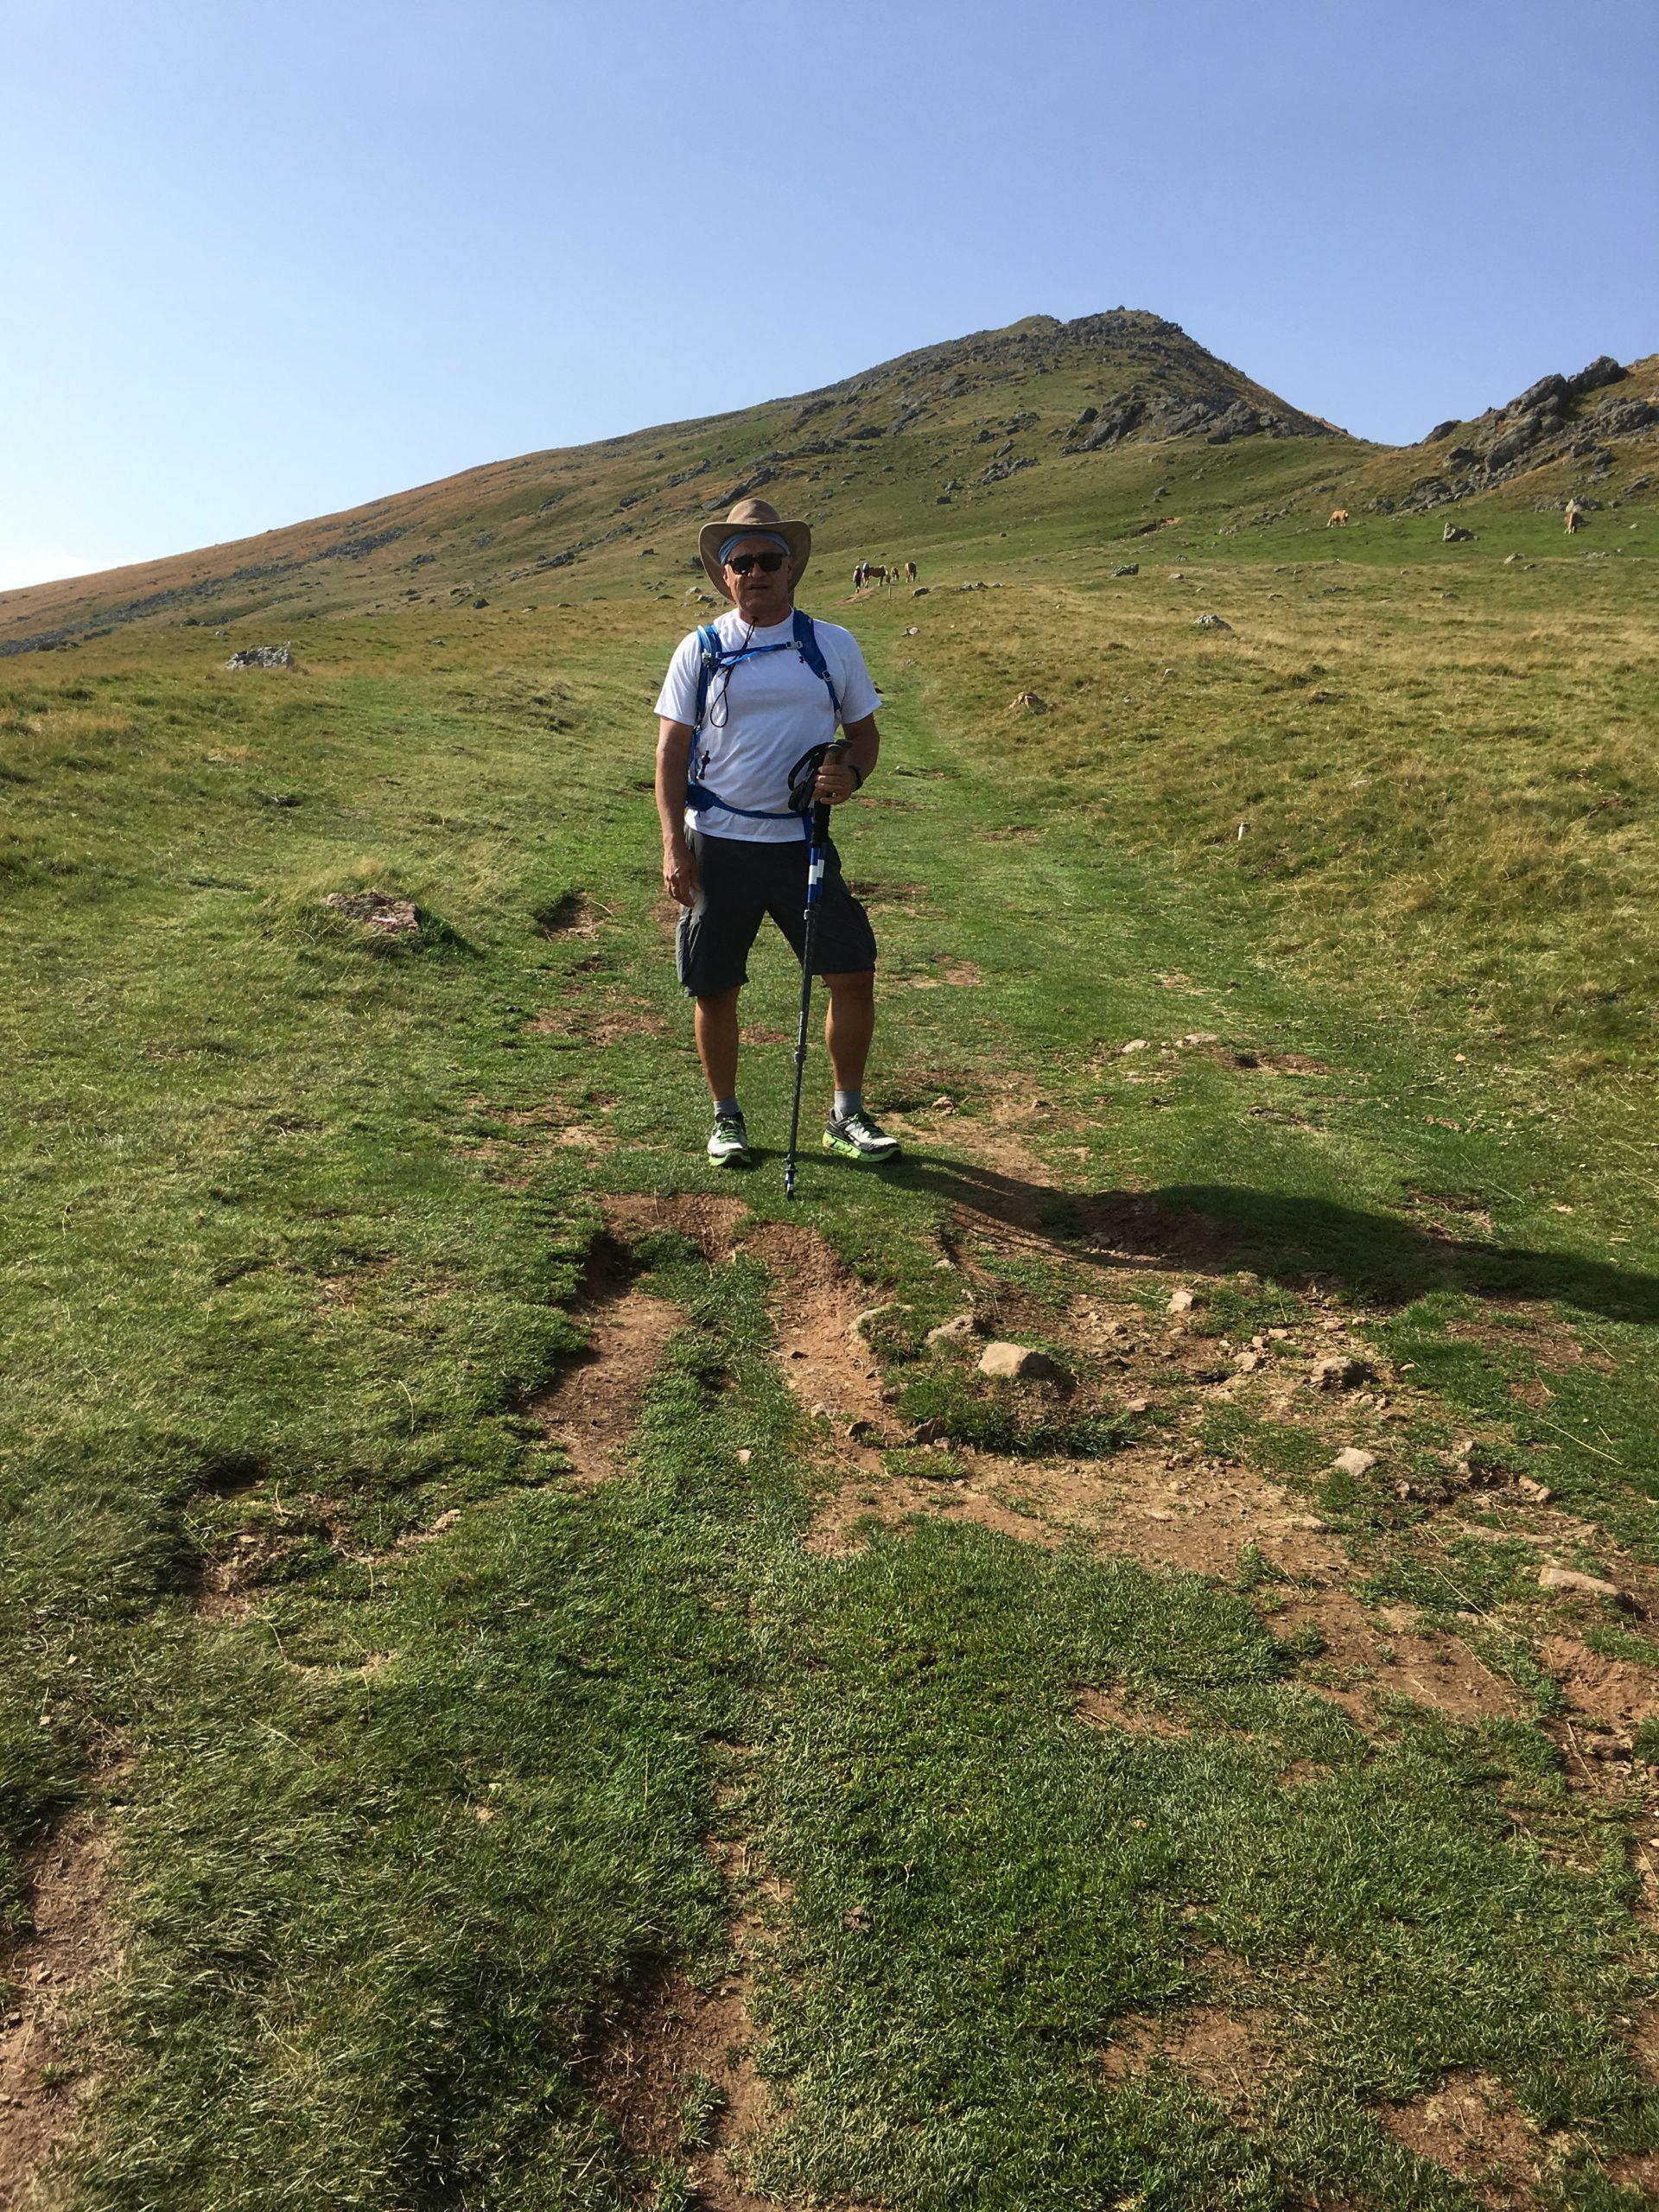 Hikingdan Successfully Crosses the Pyrenees!